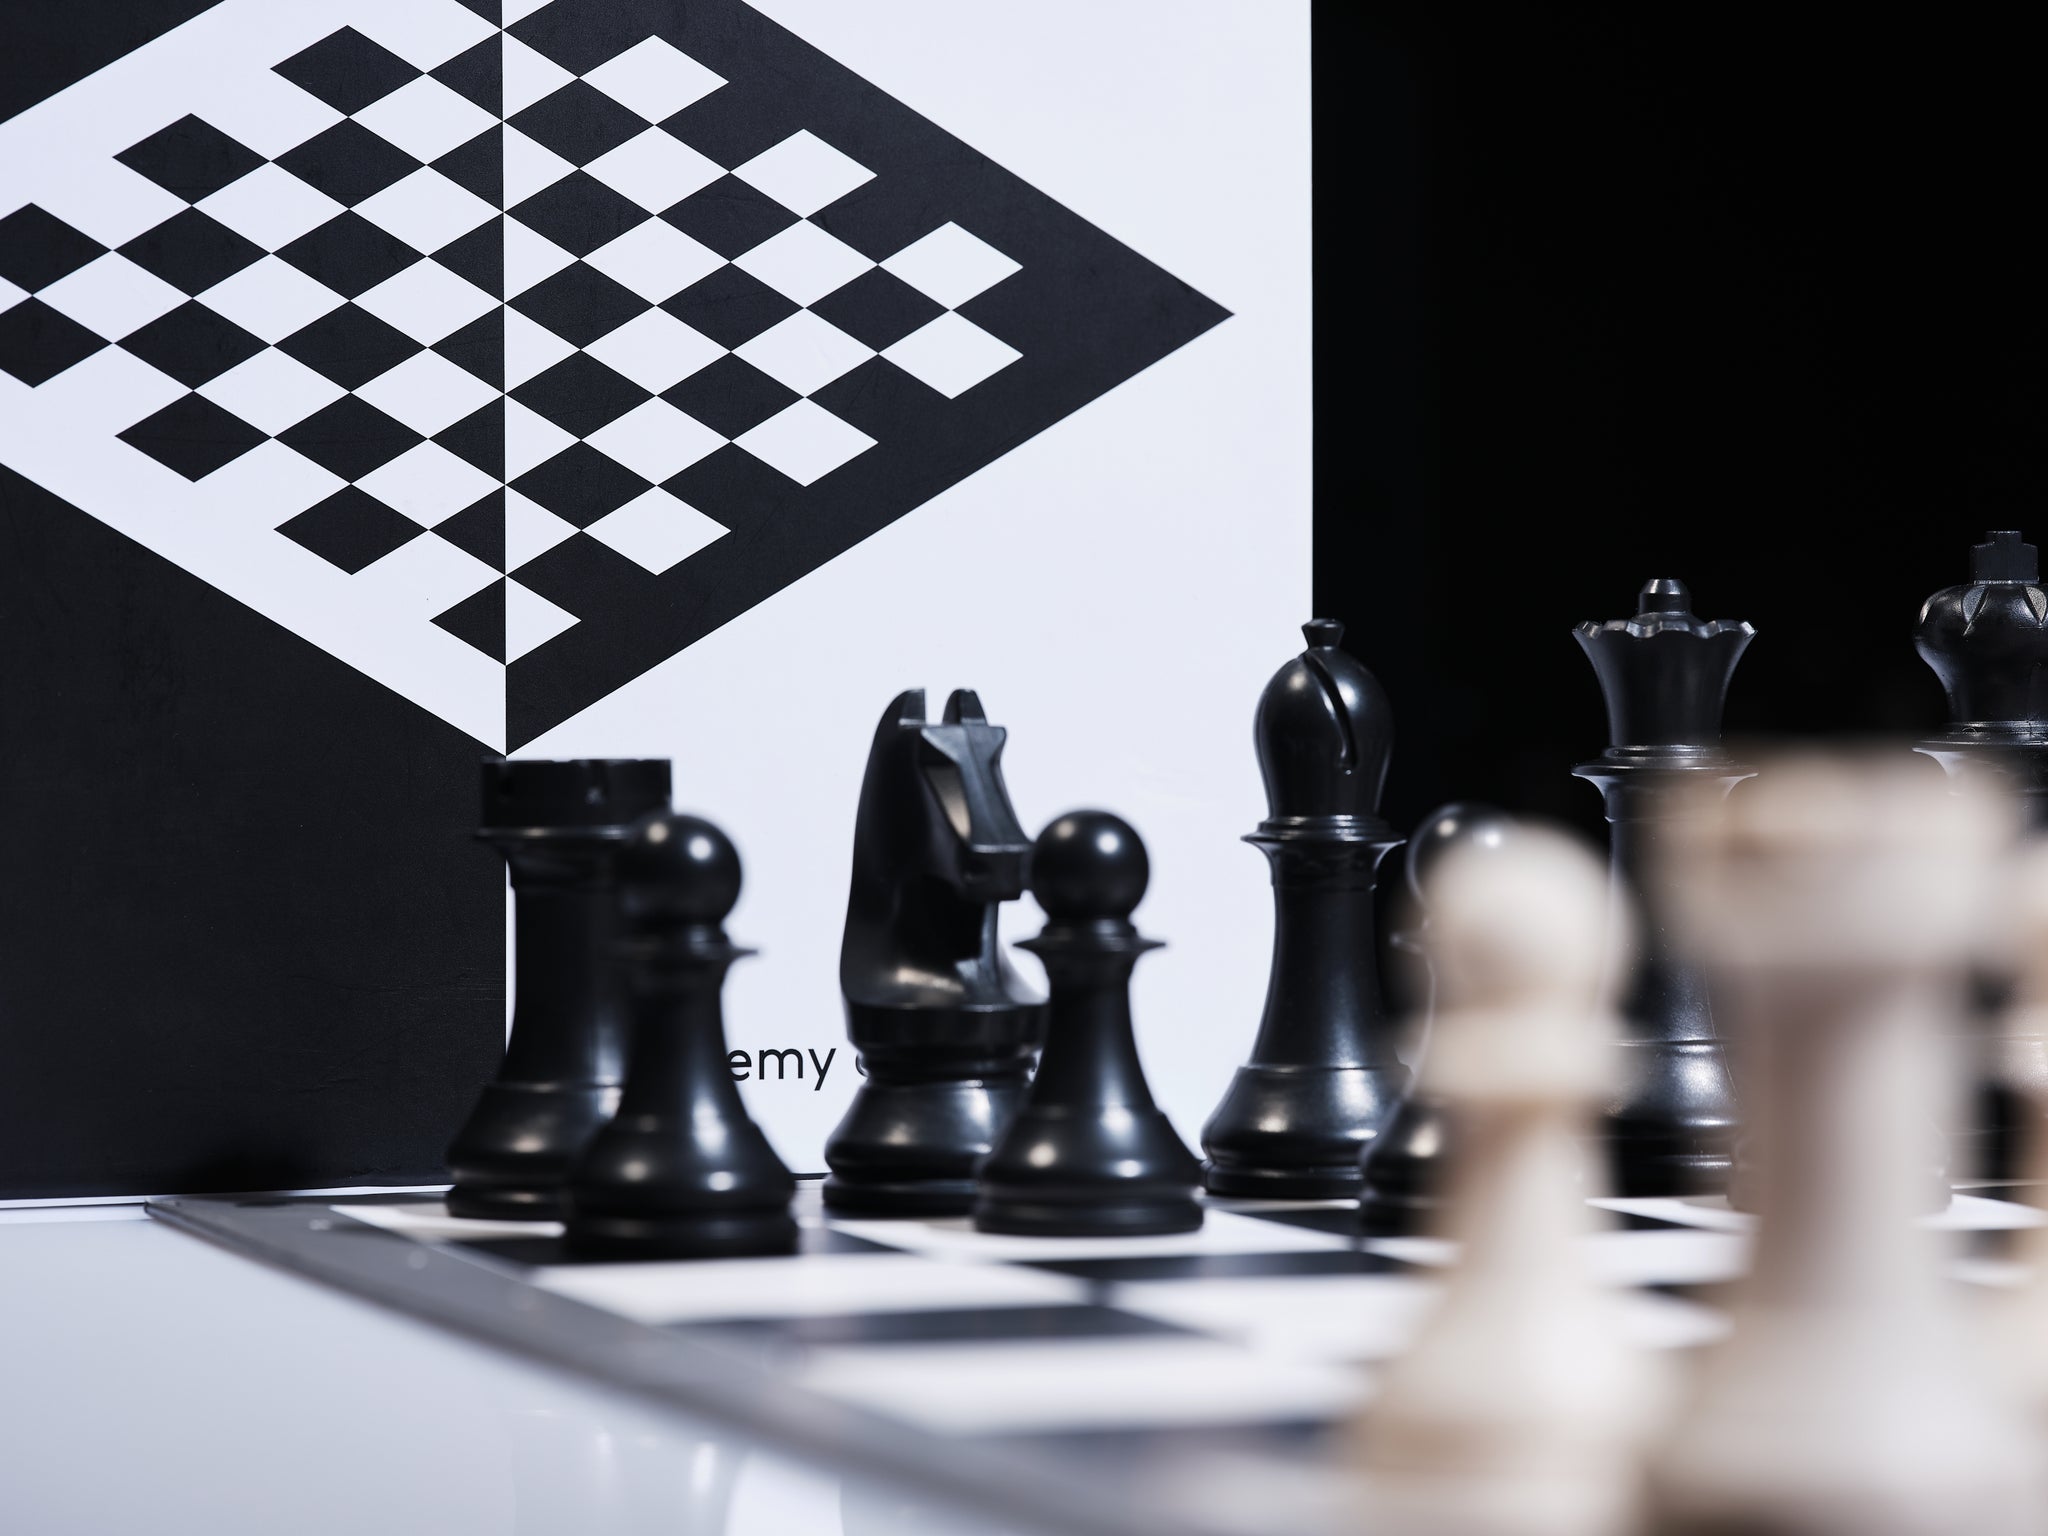 Official FIDE World Championship Chess Set - ChessBaron Chess Sets